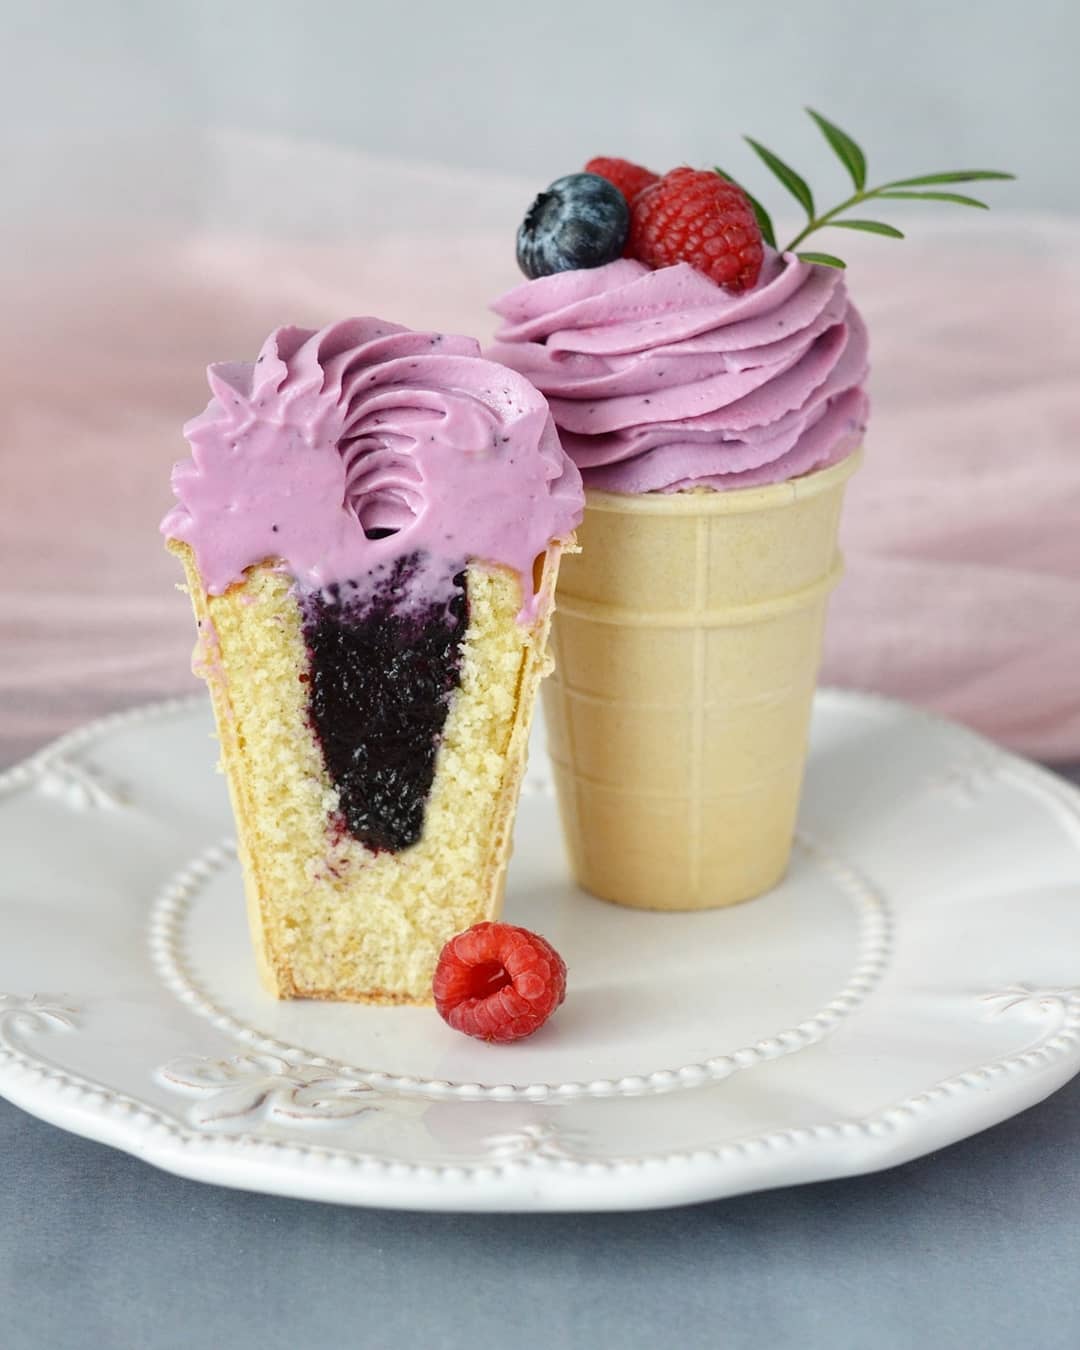 Ice cream that doesn't melt (Lemon & blueberry cupcakes)